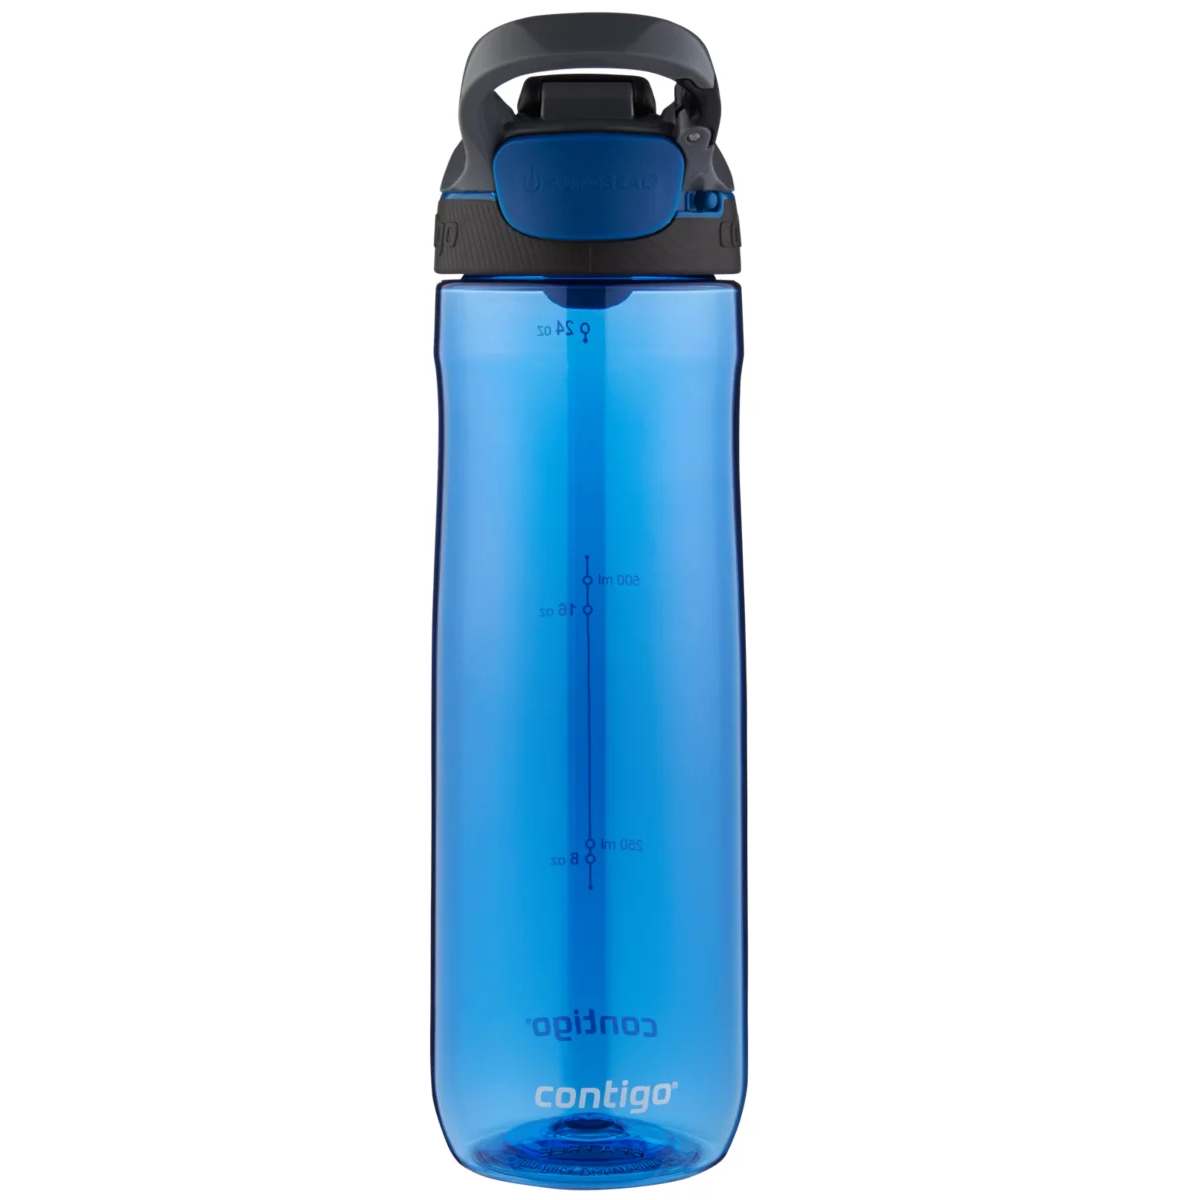 Contigo Easy Clean AUTOSPOUT™ Kids Water Bottle, 420 ml (Dino Body)